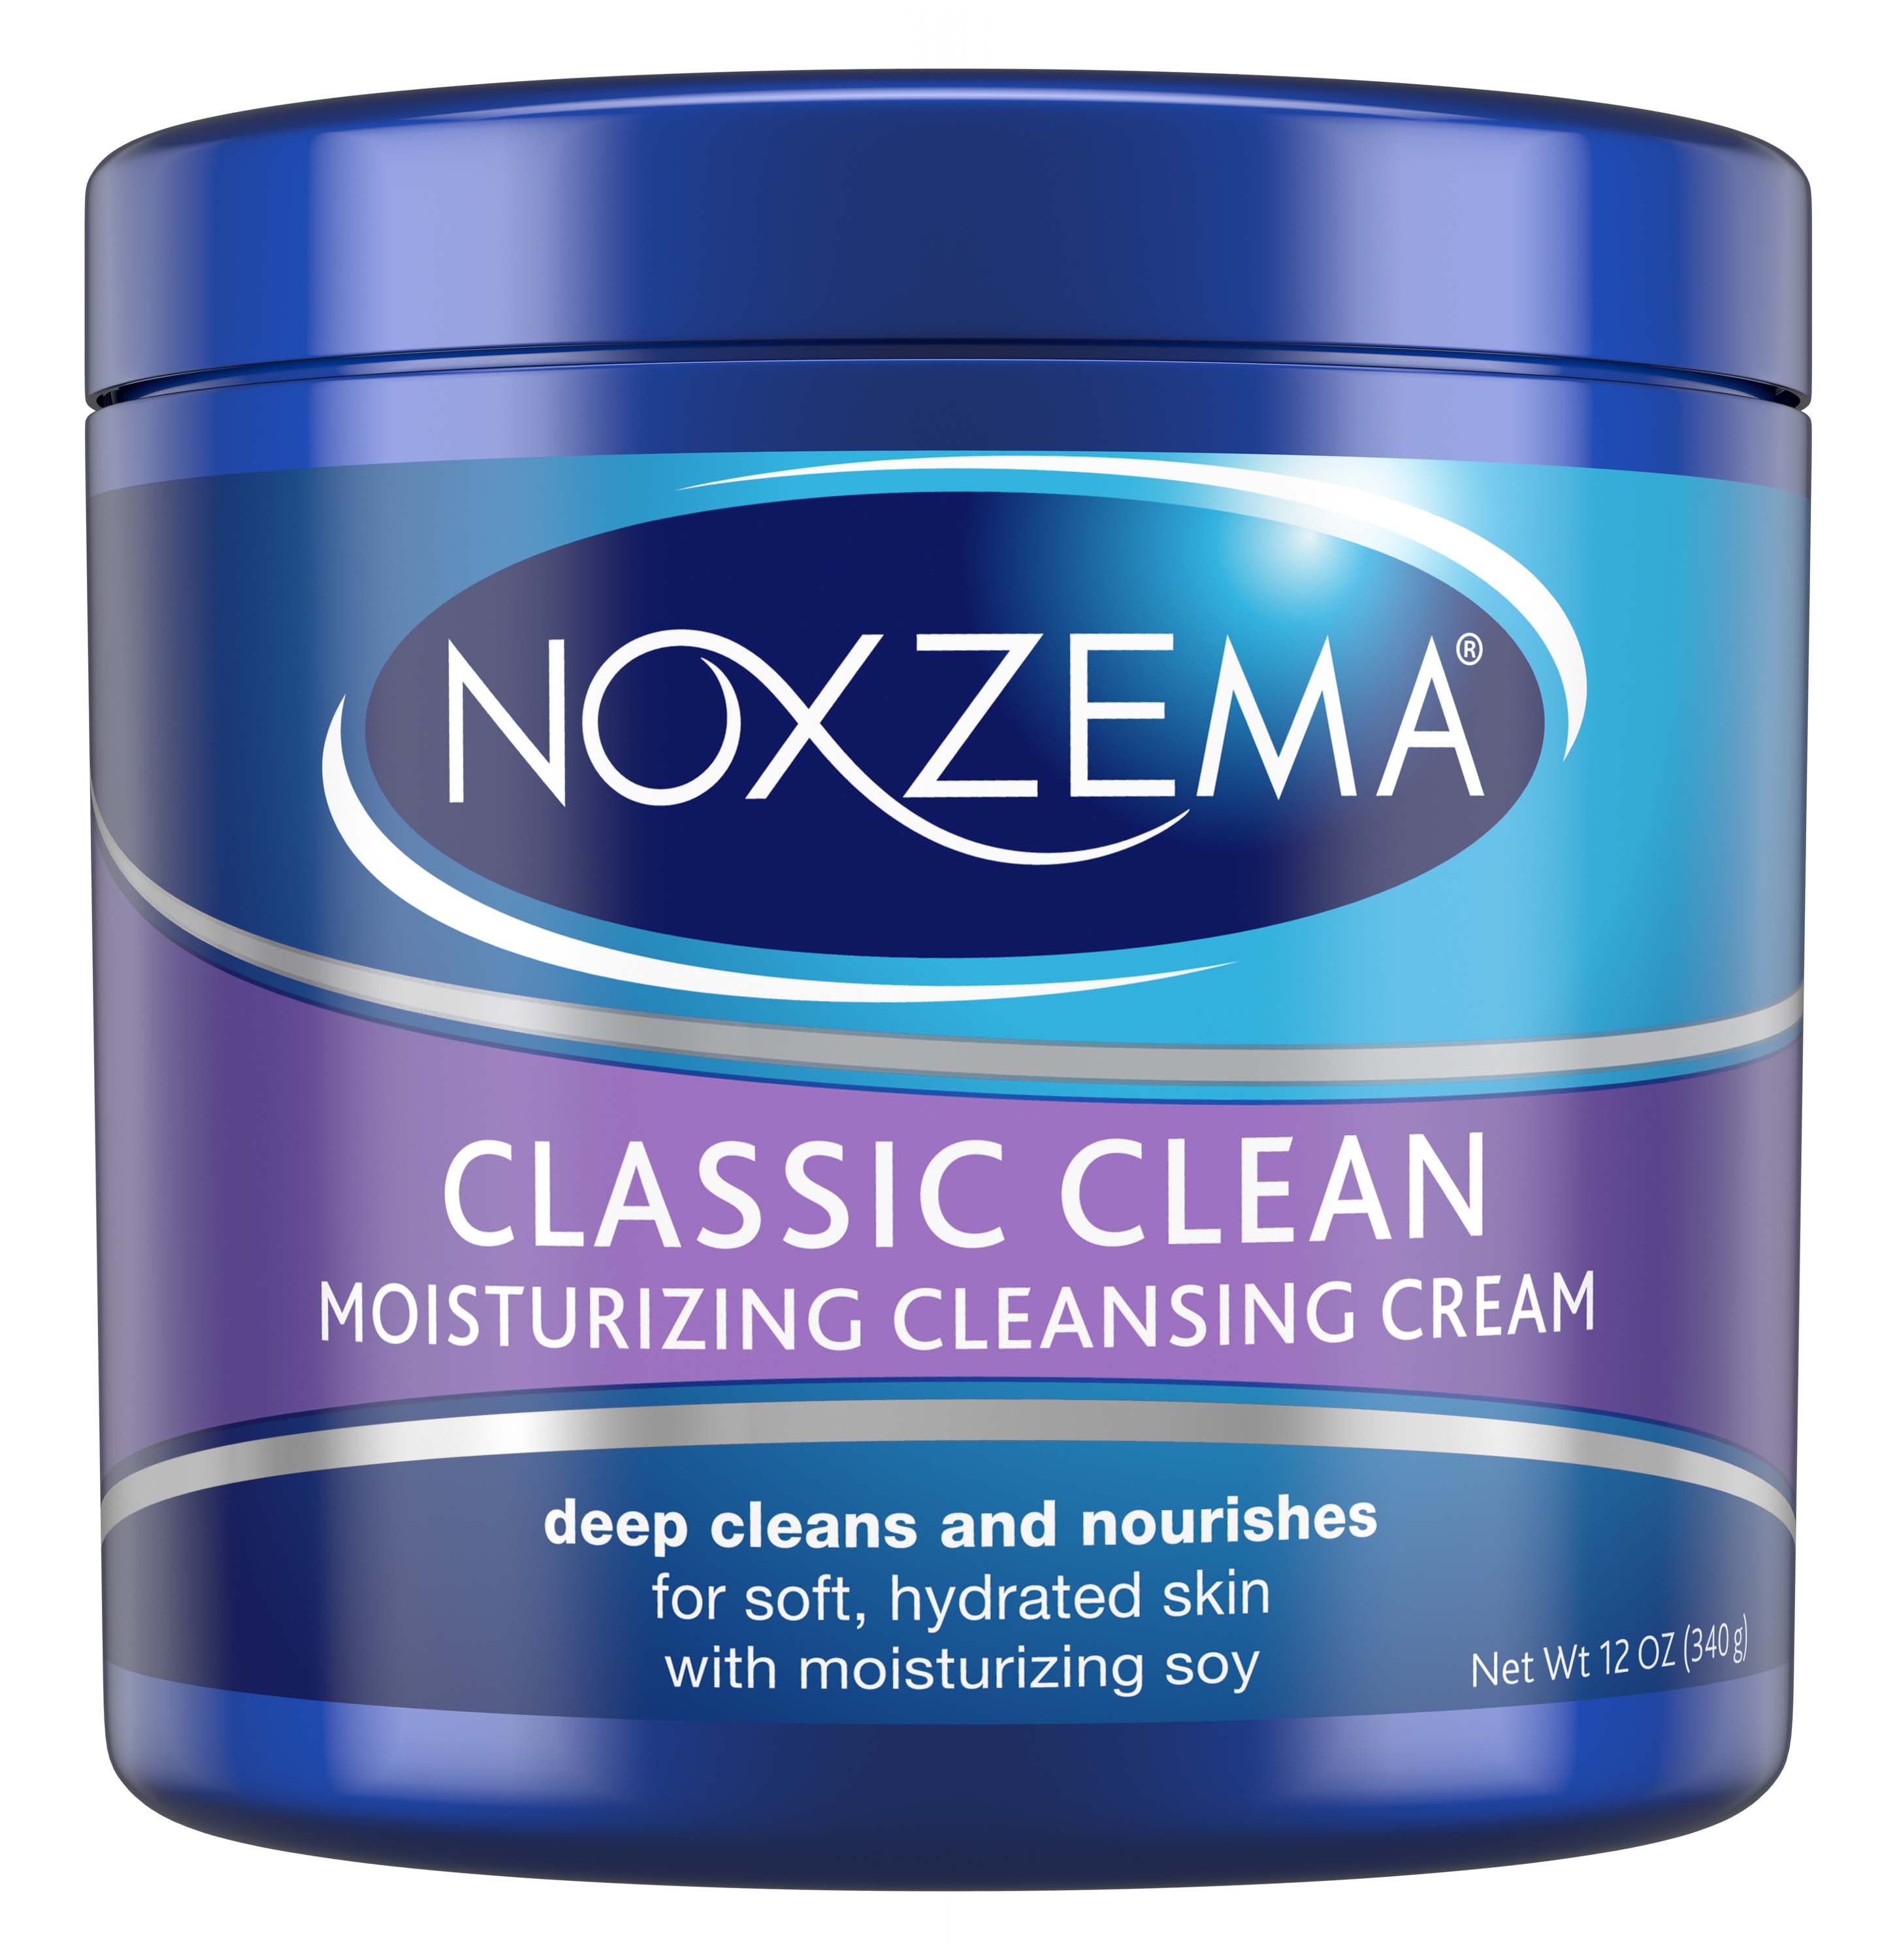 Noxzema Moisturizing Cleansing Cream